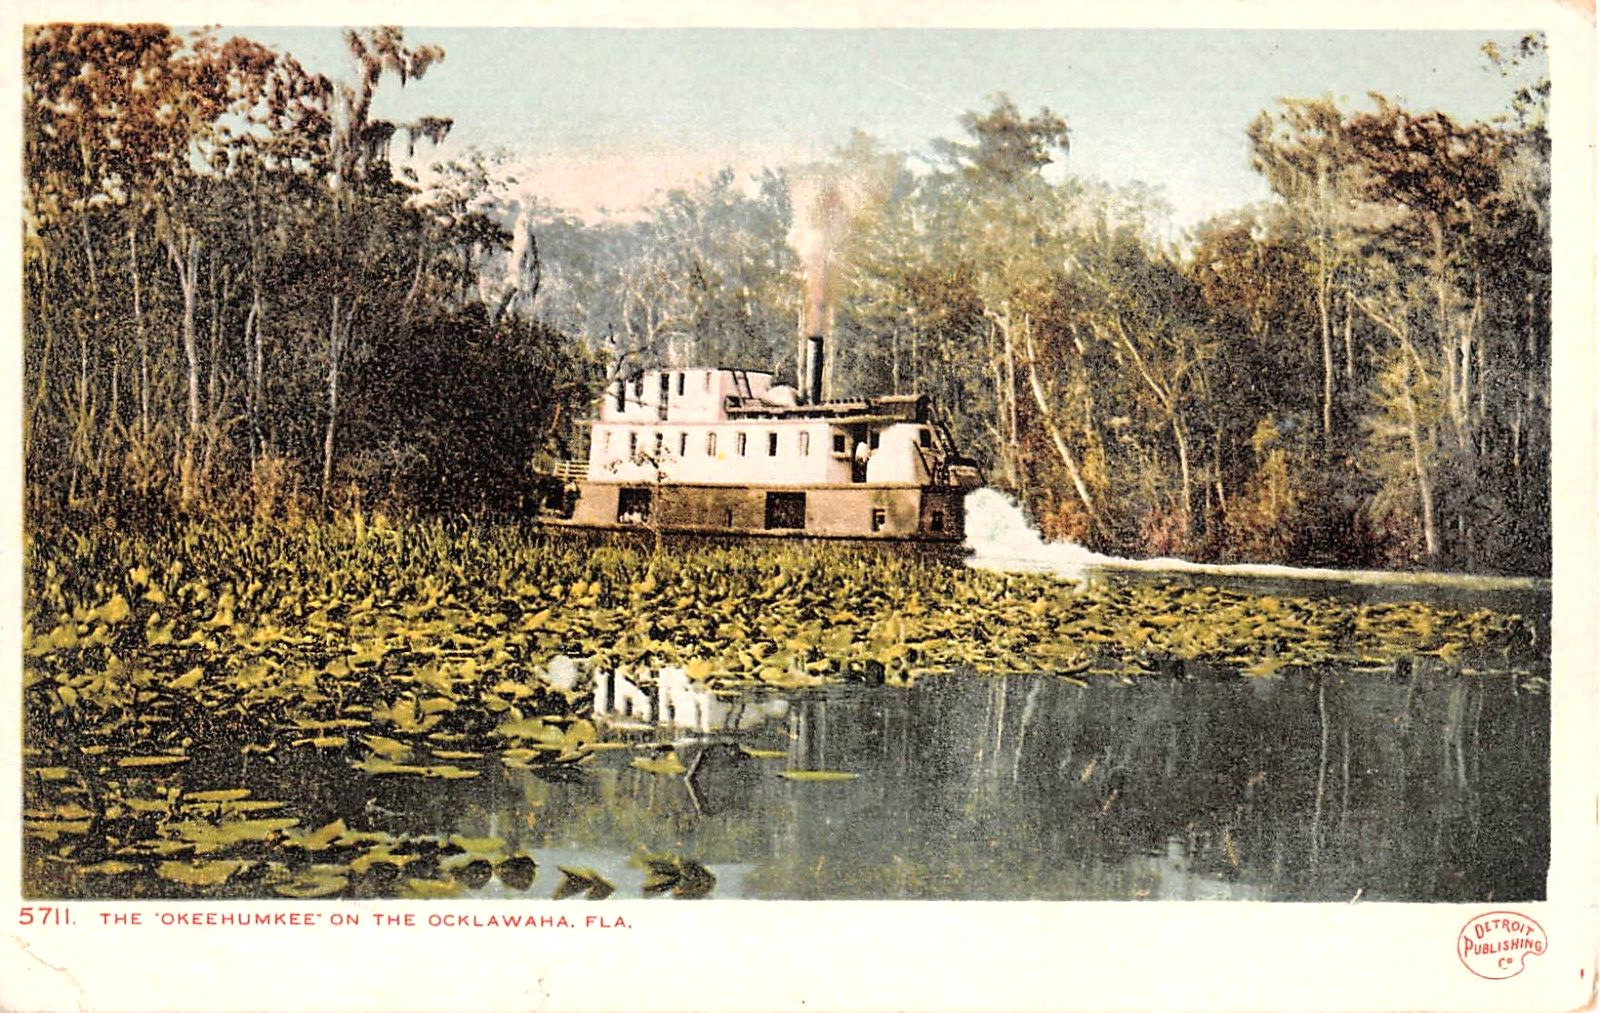 c.1905 Steamer Okeehumkee on Ocklawaha River FL post card